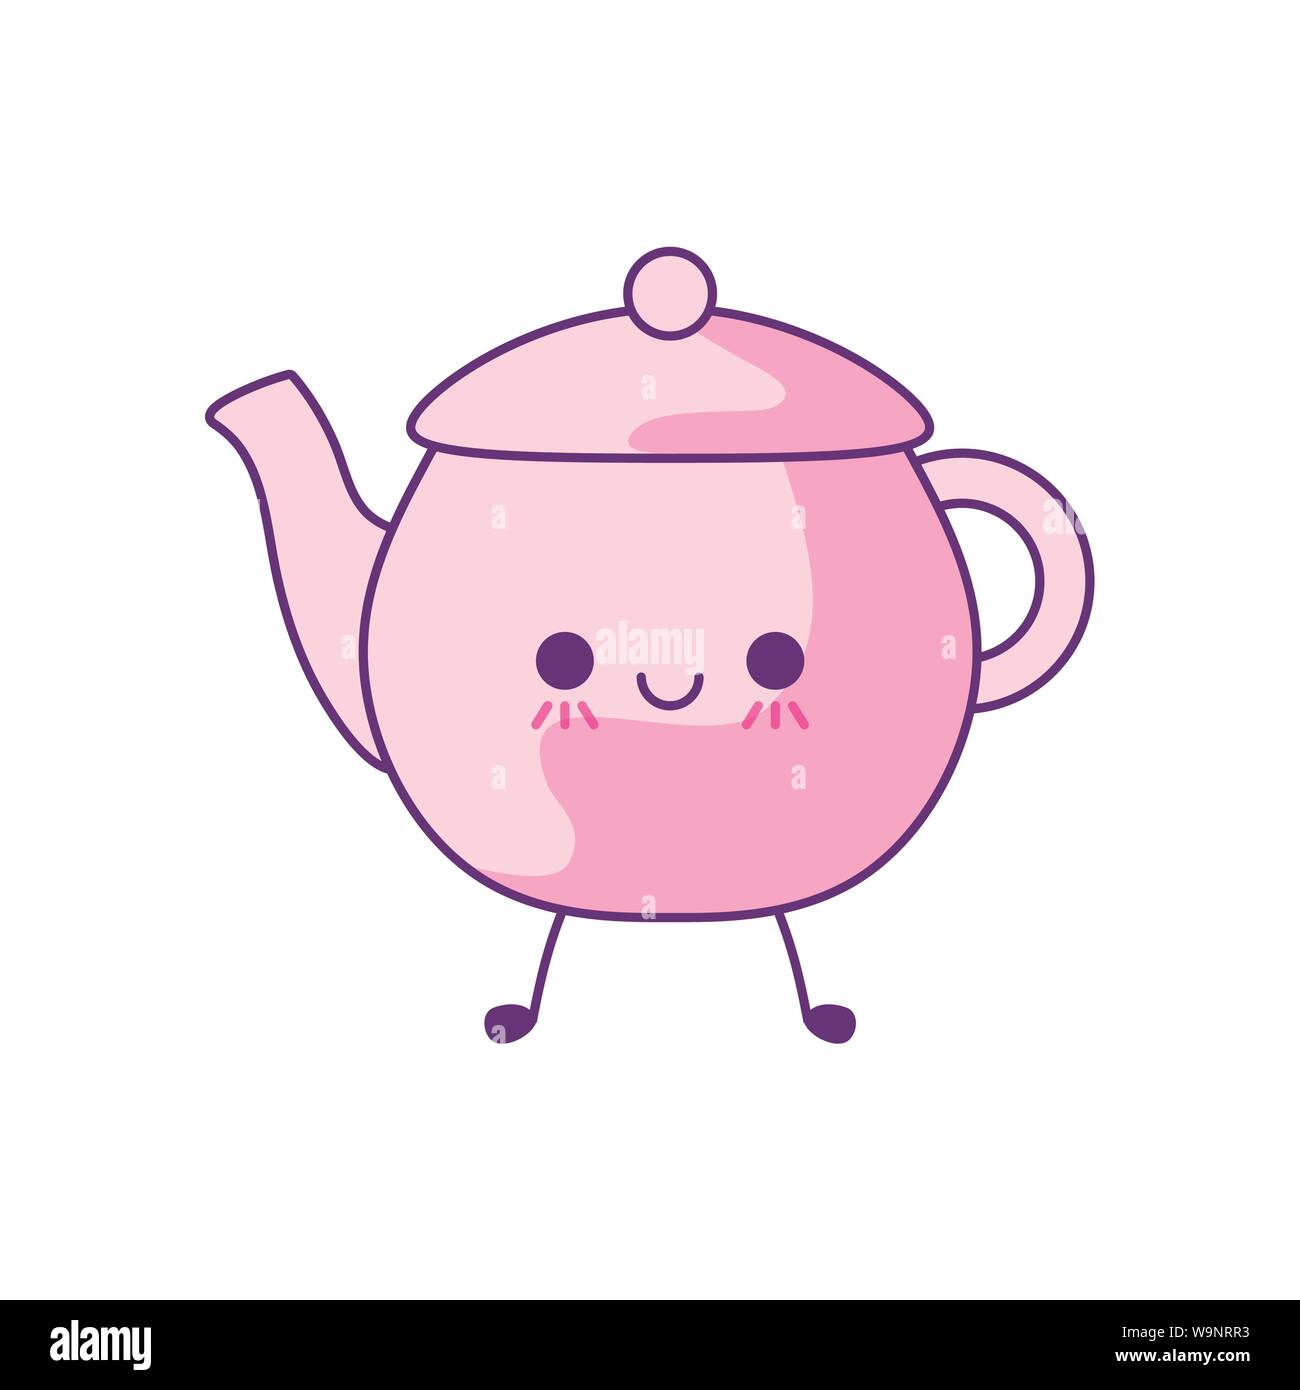 https://c8.alamy.com/comp/W9NRR3/cute-teapot-kitchen-kawaii-style-vector-illustration-design-W9NRR3.jpg